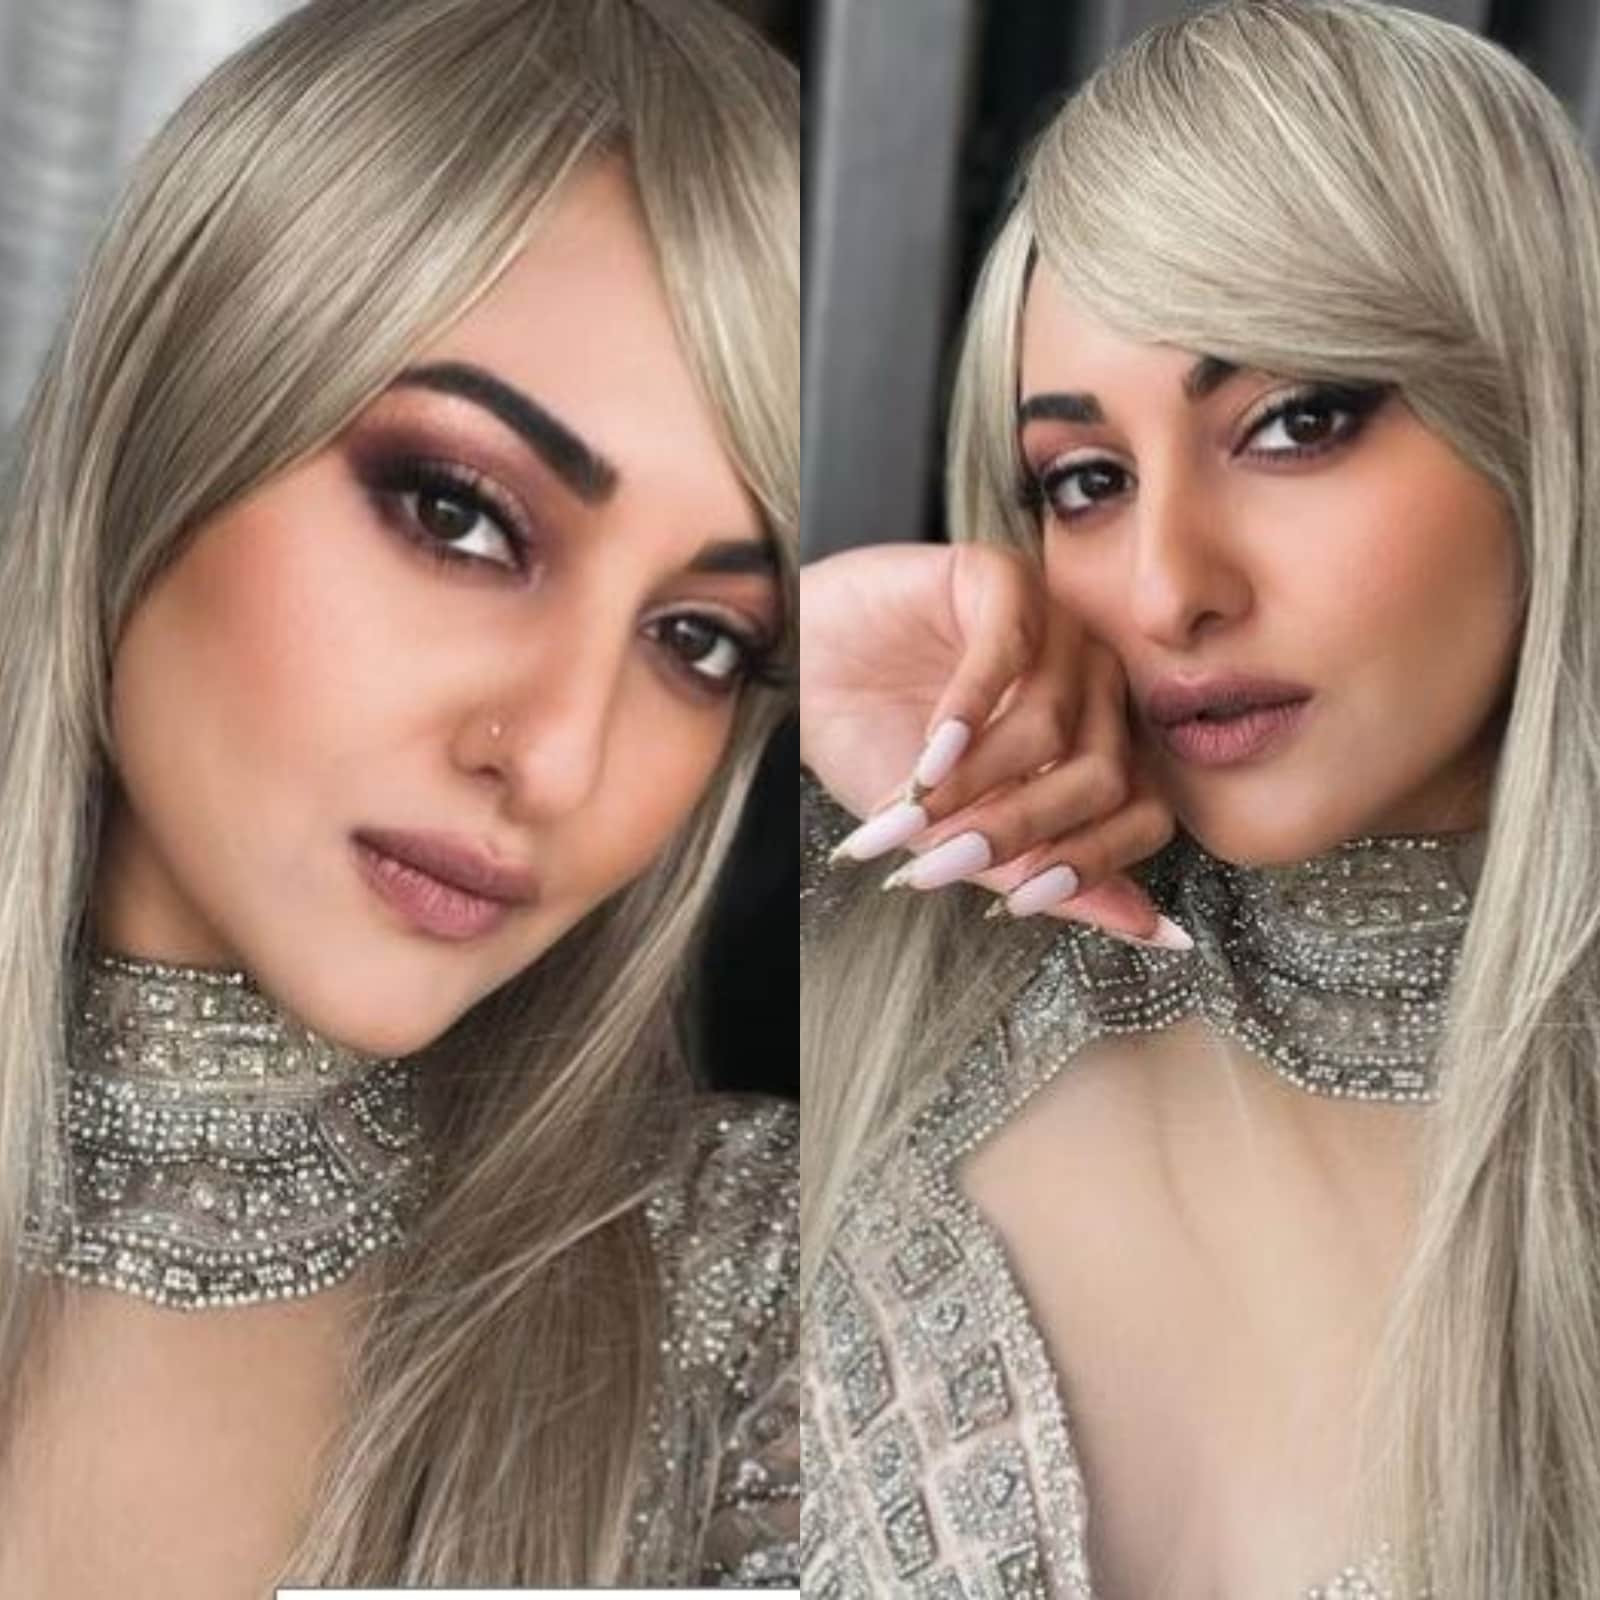 Sonakshi Sinha Xxxx Photo - Sonakshi Sinha Flaunts Her Look in Blonde Hair in Latest Instagram Post,  See Pics